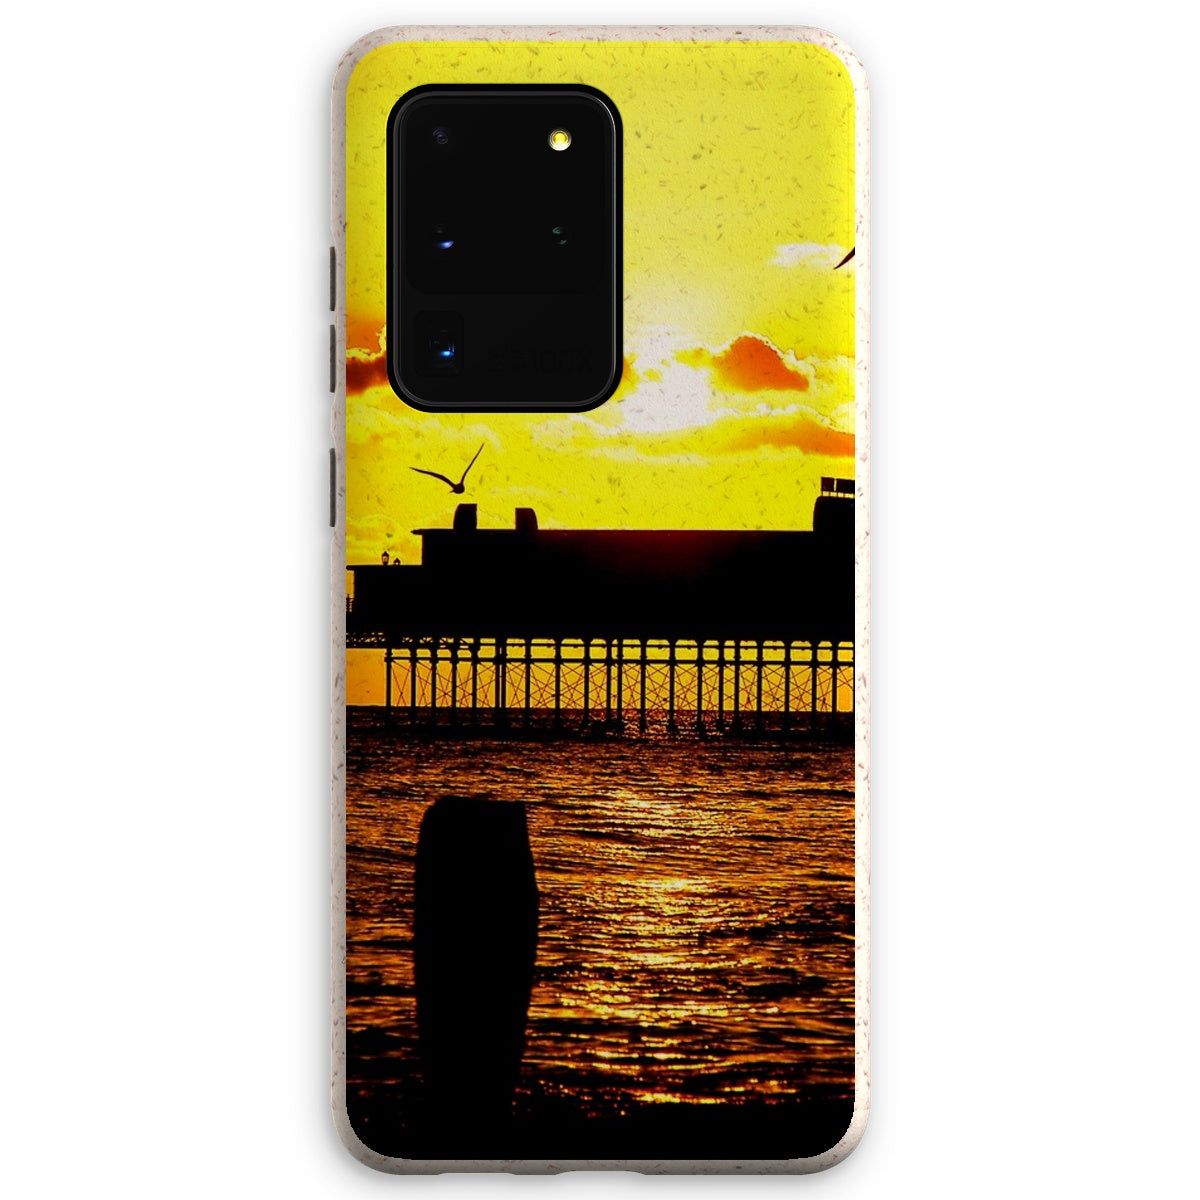 Worthing Pier Perfect Sunset by David Sawyer Eco Phone Case